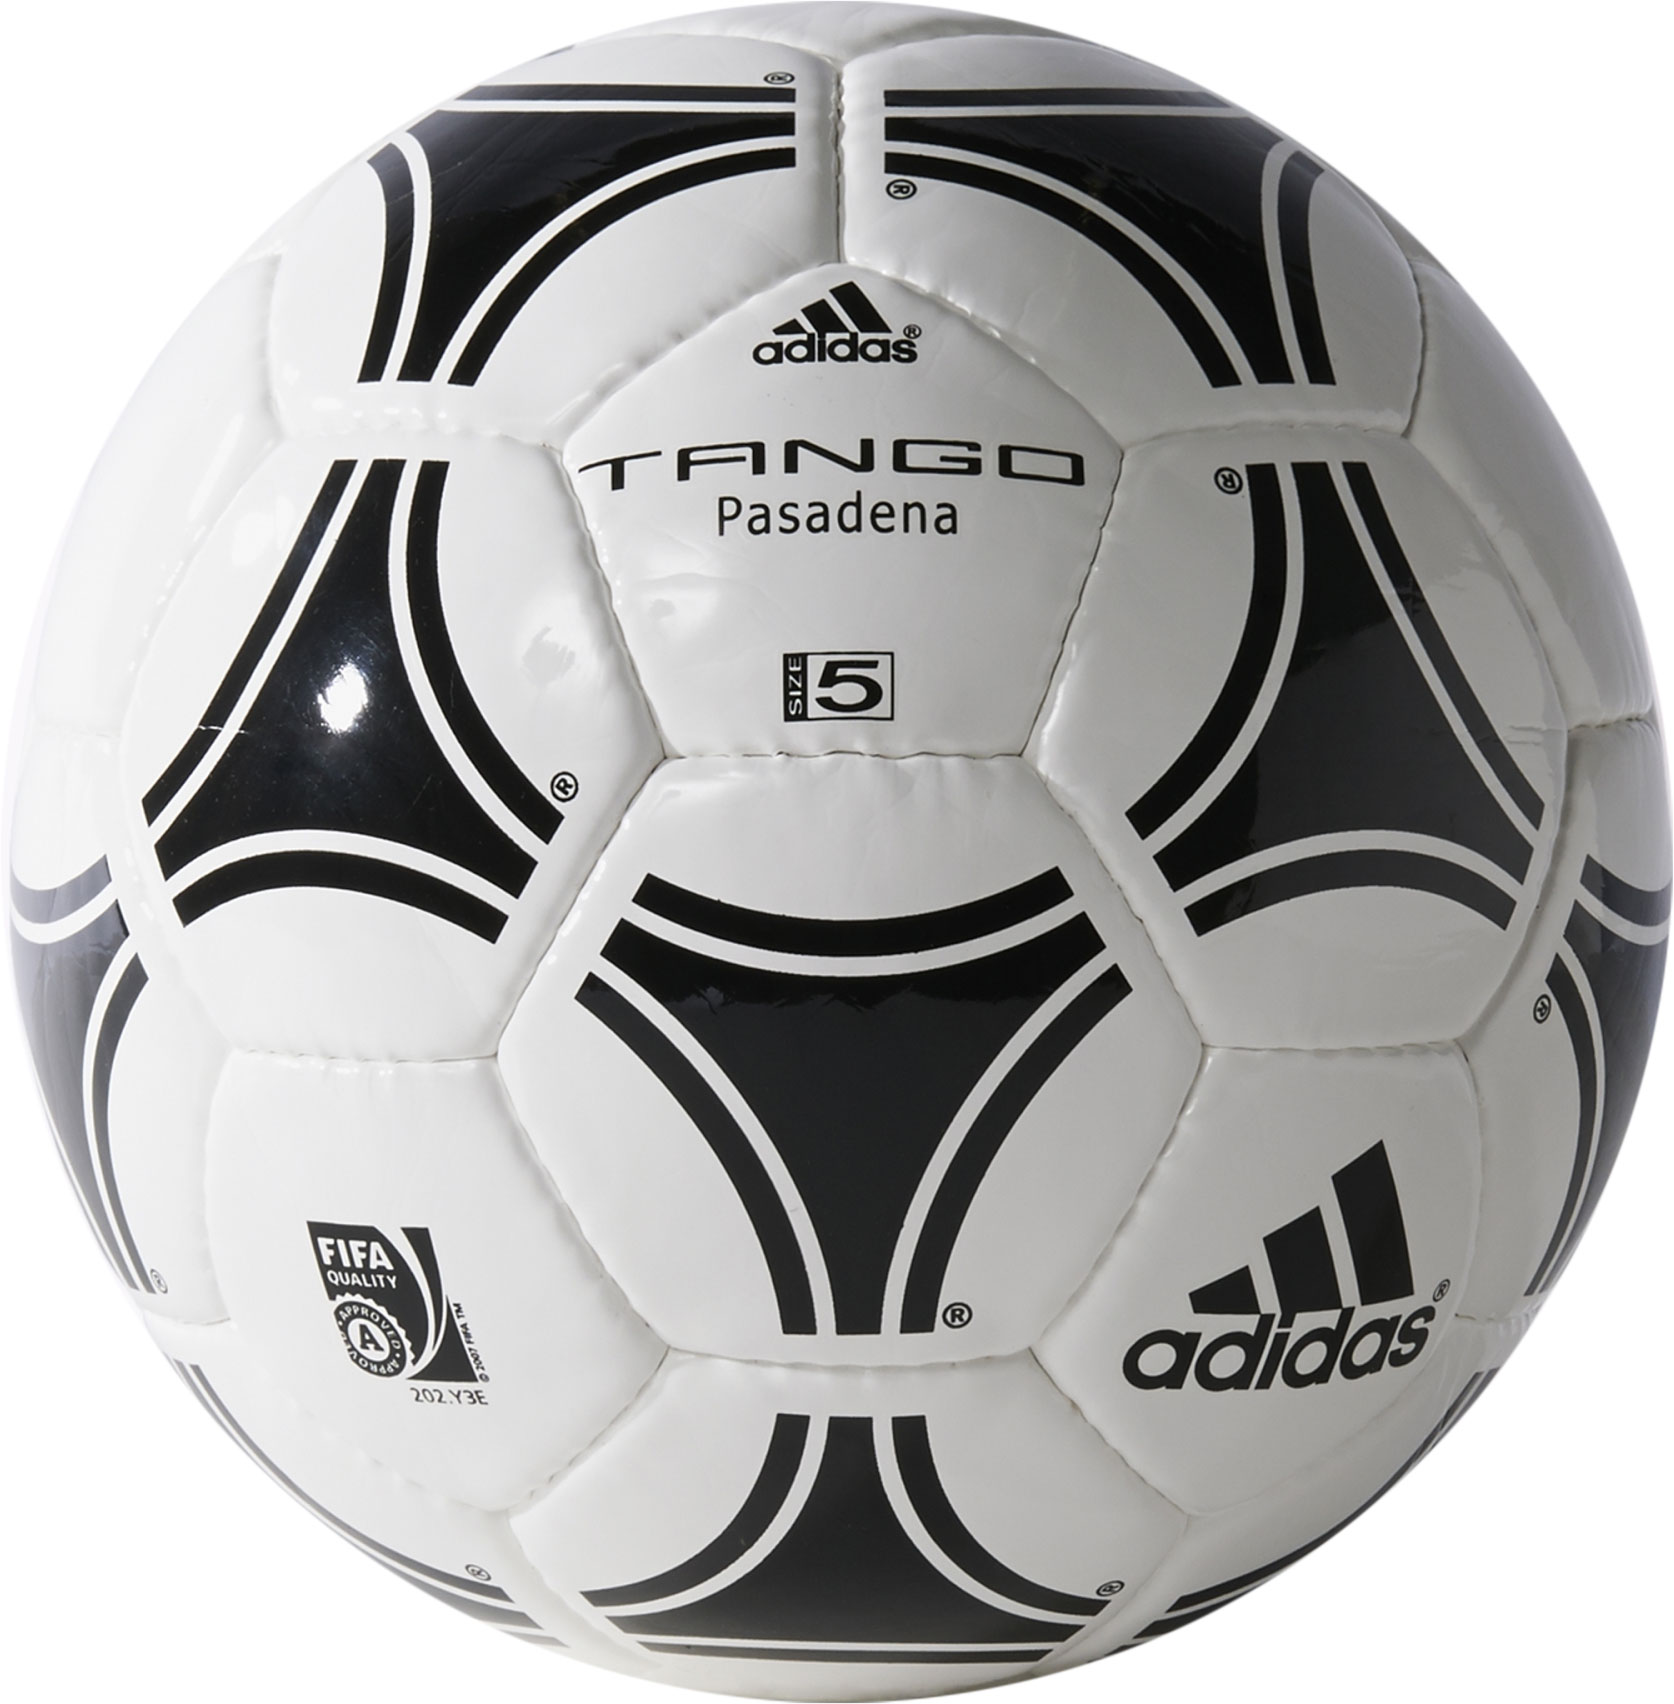 Tango Pasadena - Soccer Ball Adidas